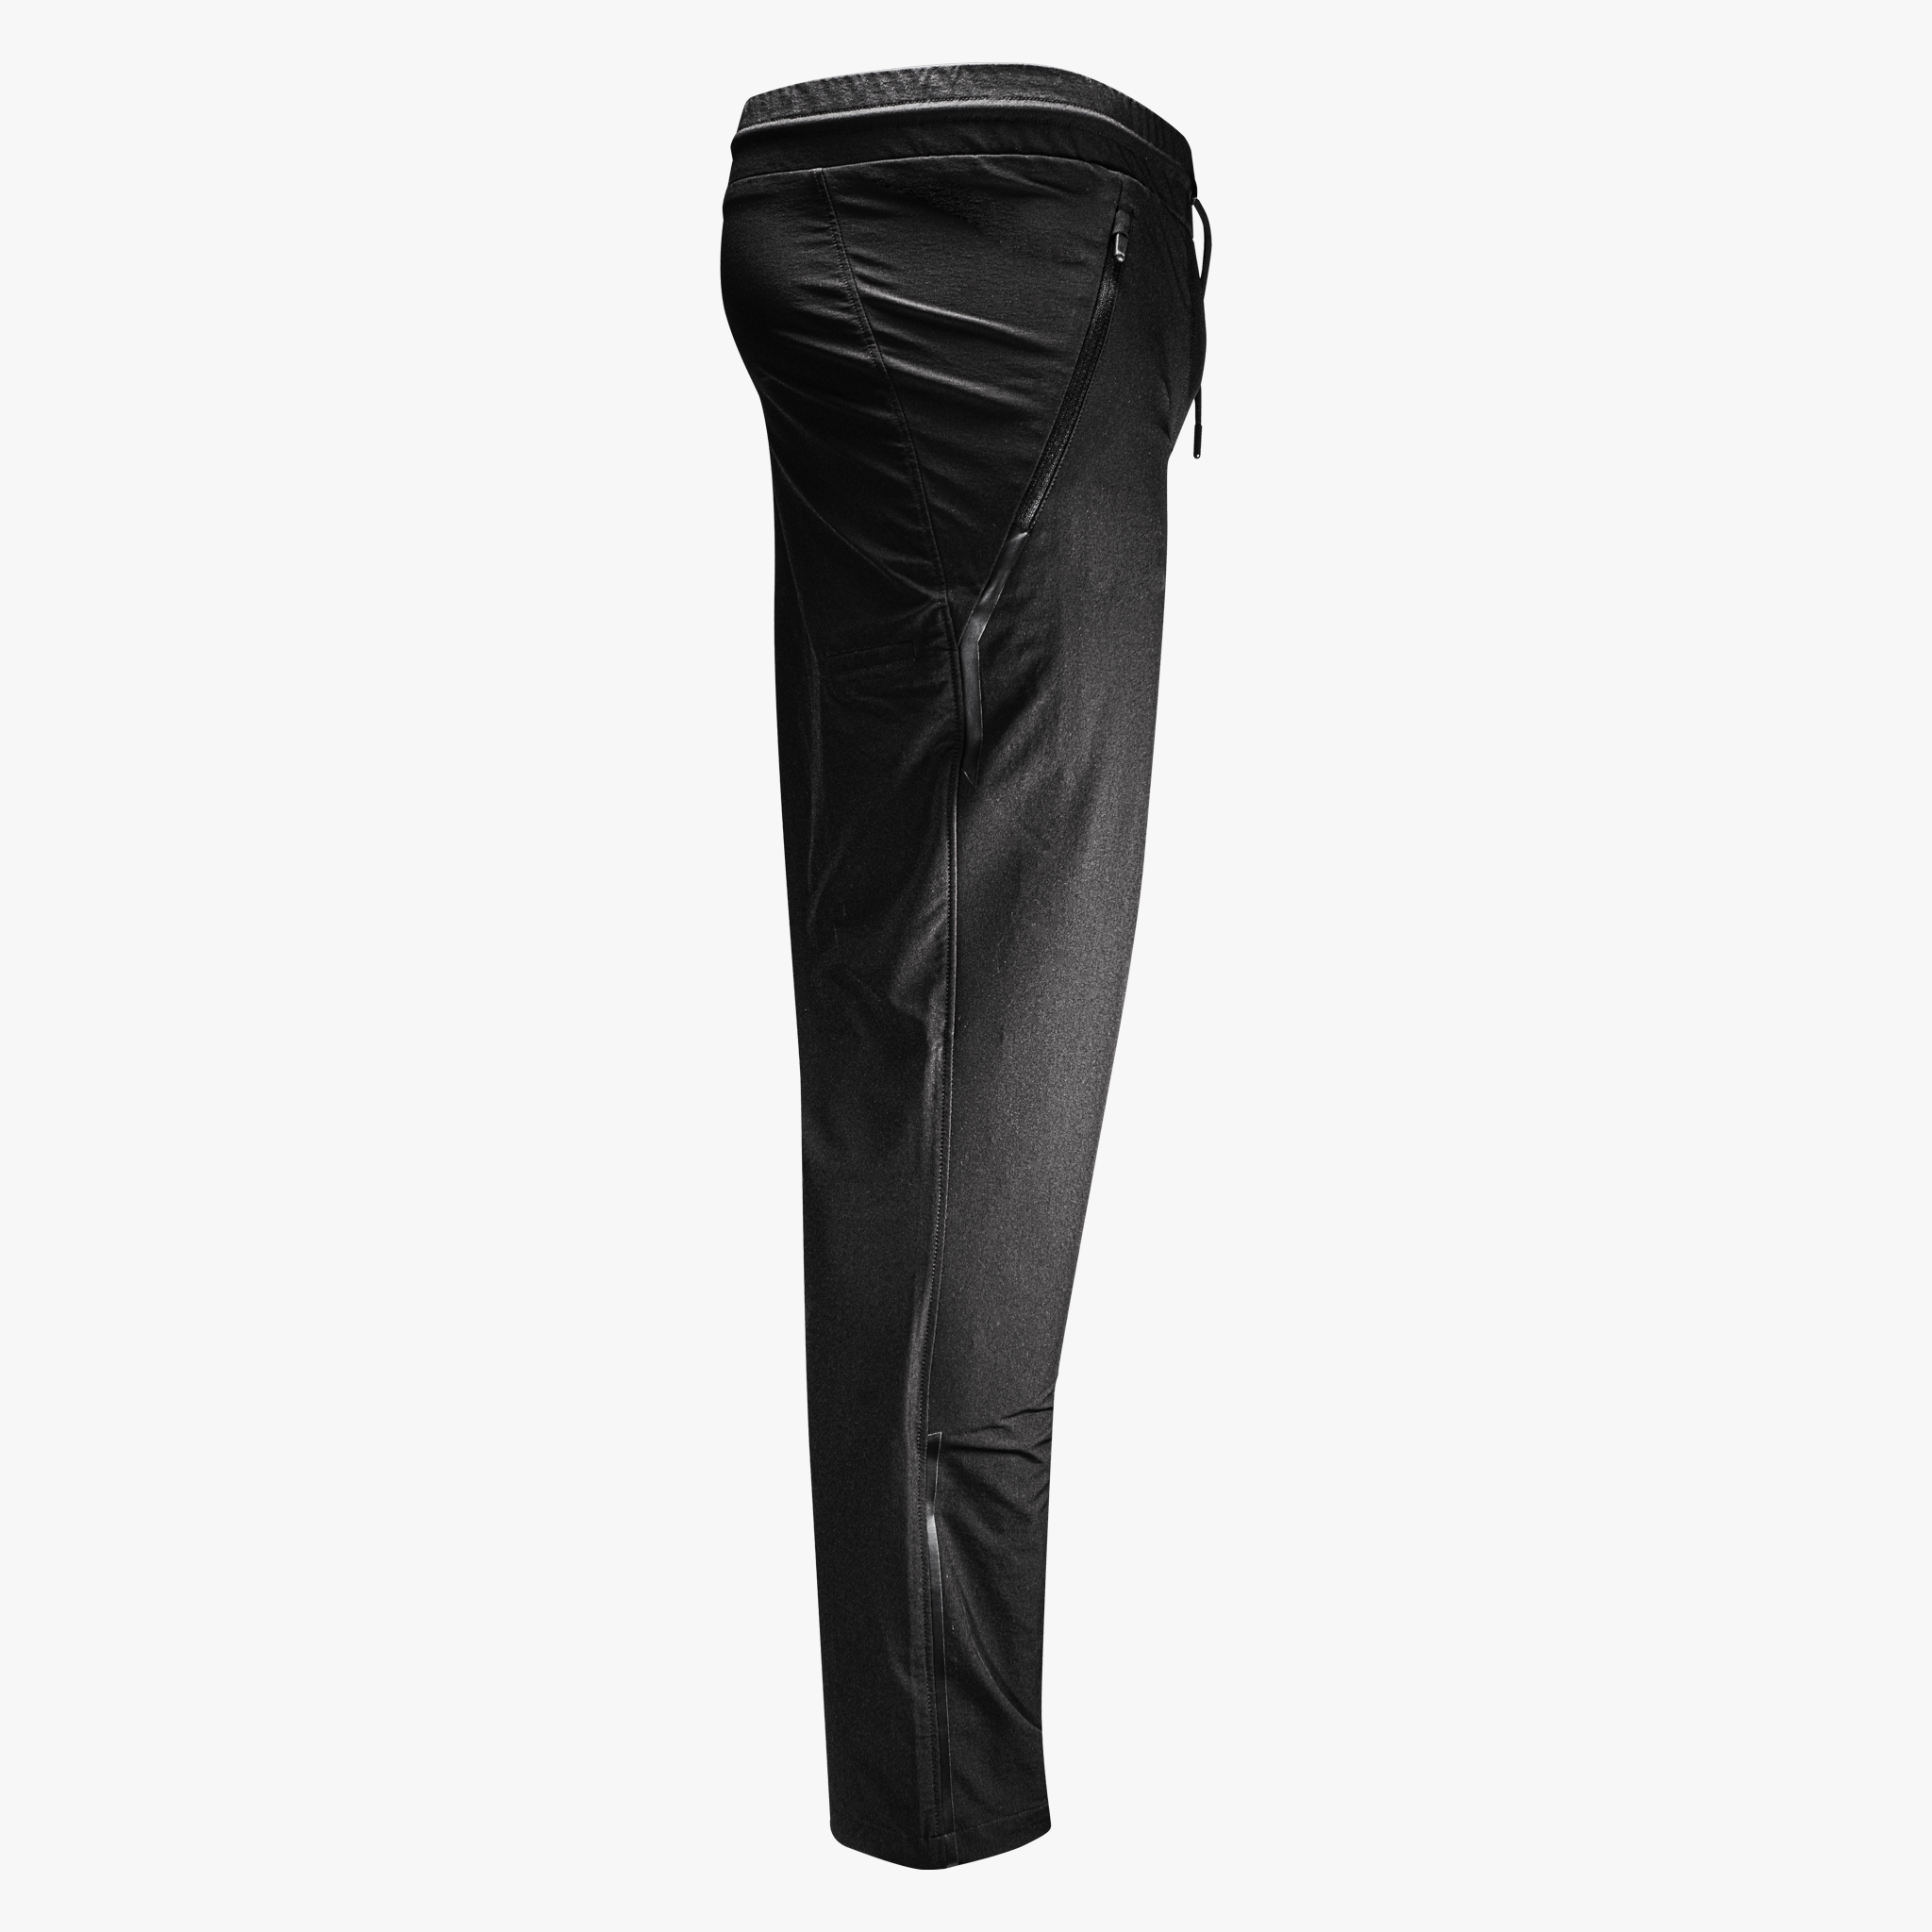 Carbon CC Paintball Pants - Black - Medium